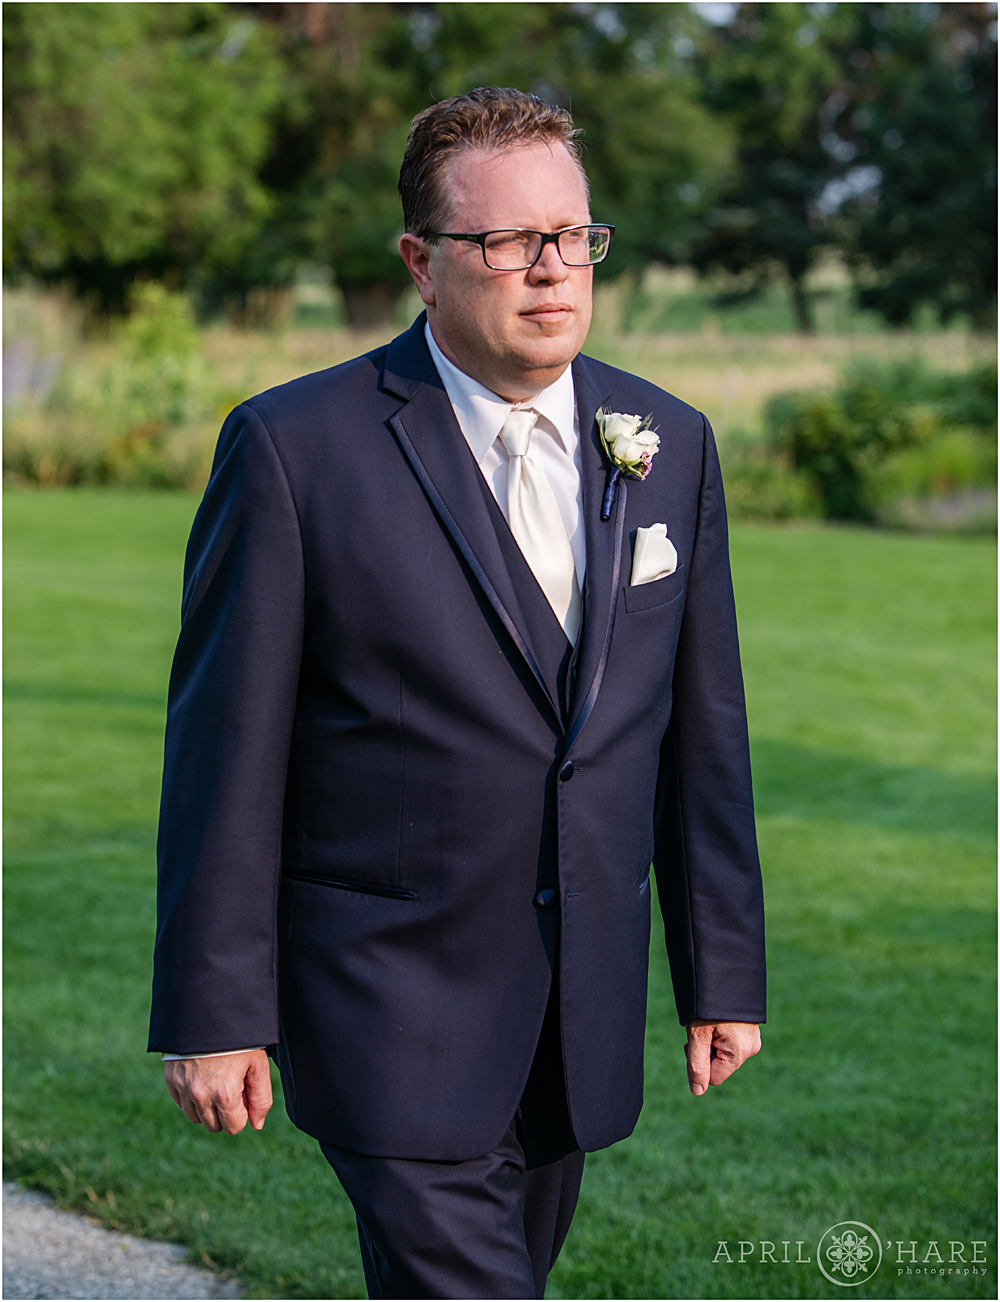 Groom walks down the aisle at his Littleton Garden Wedding